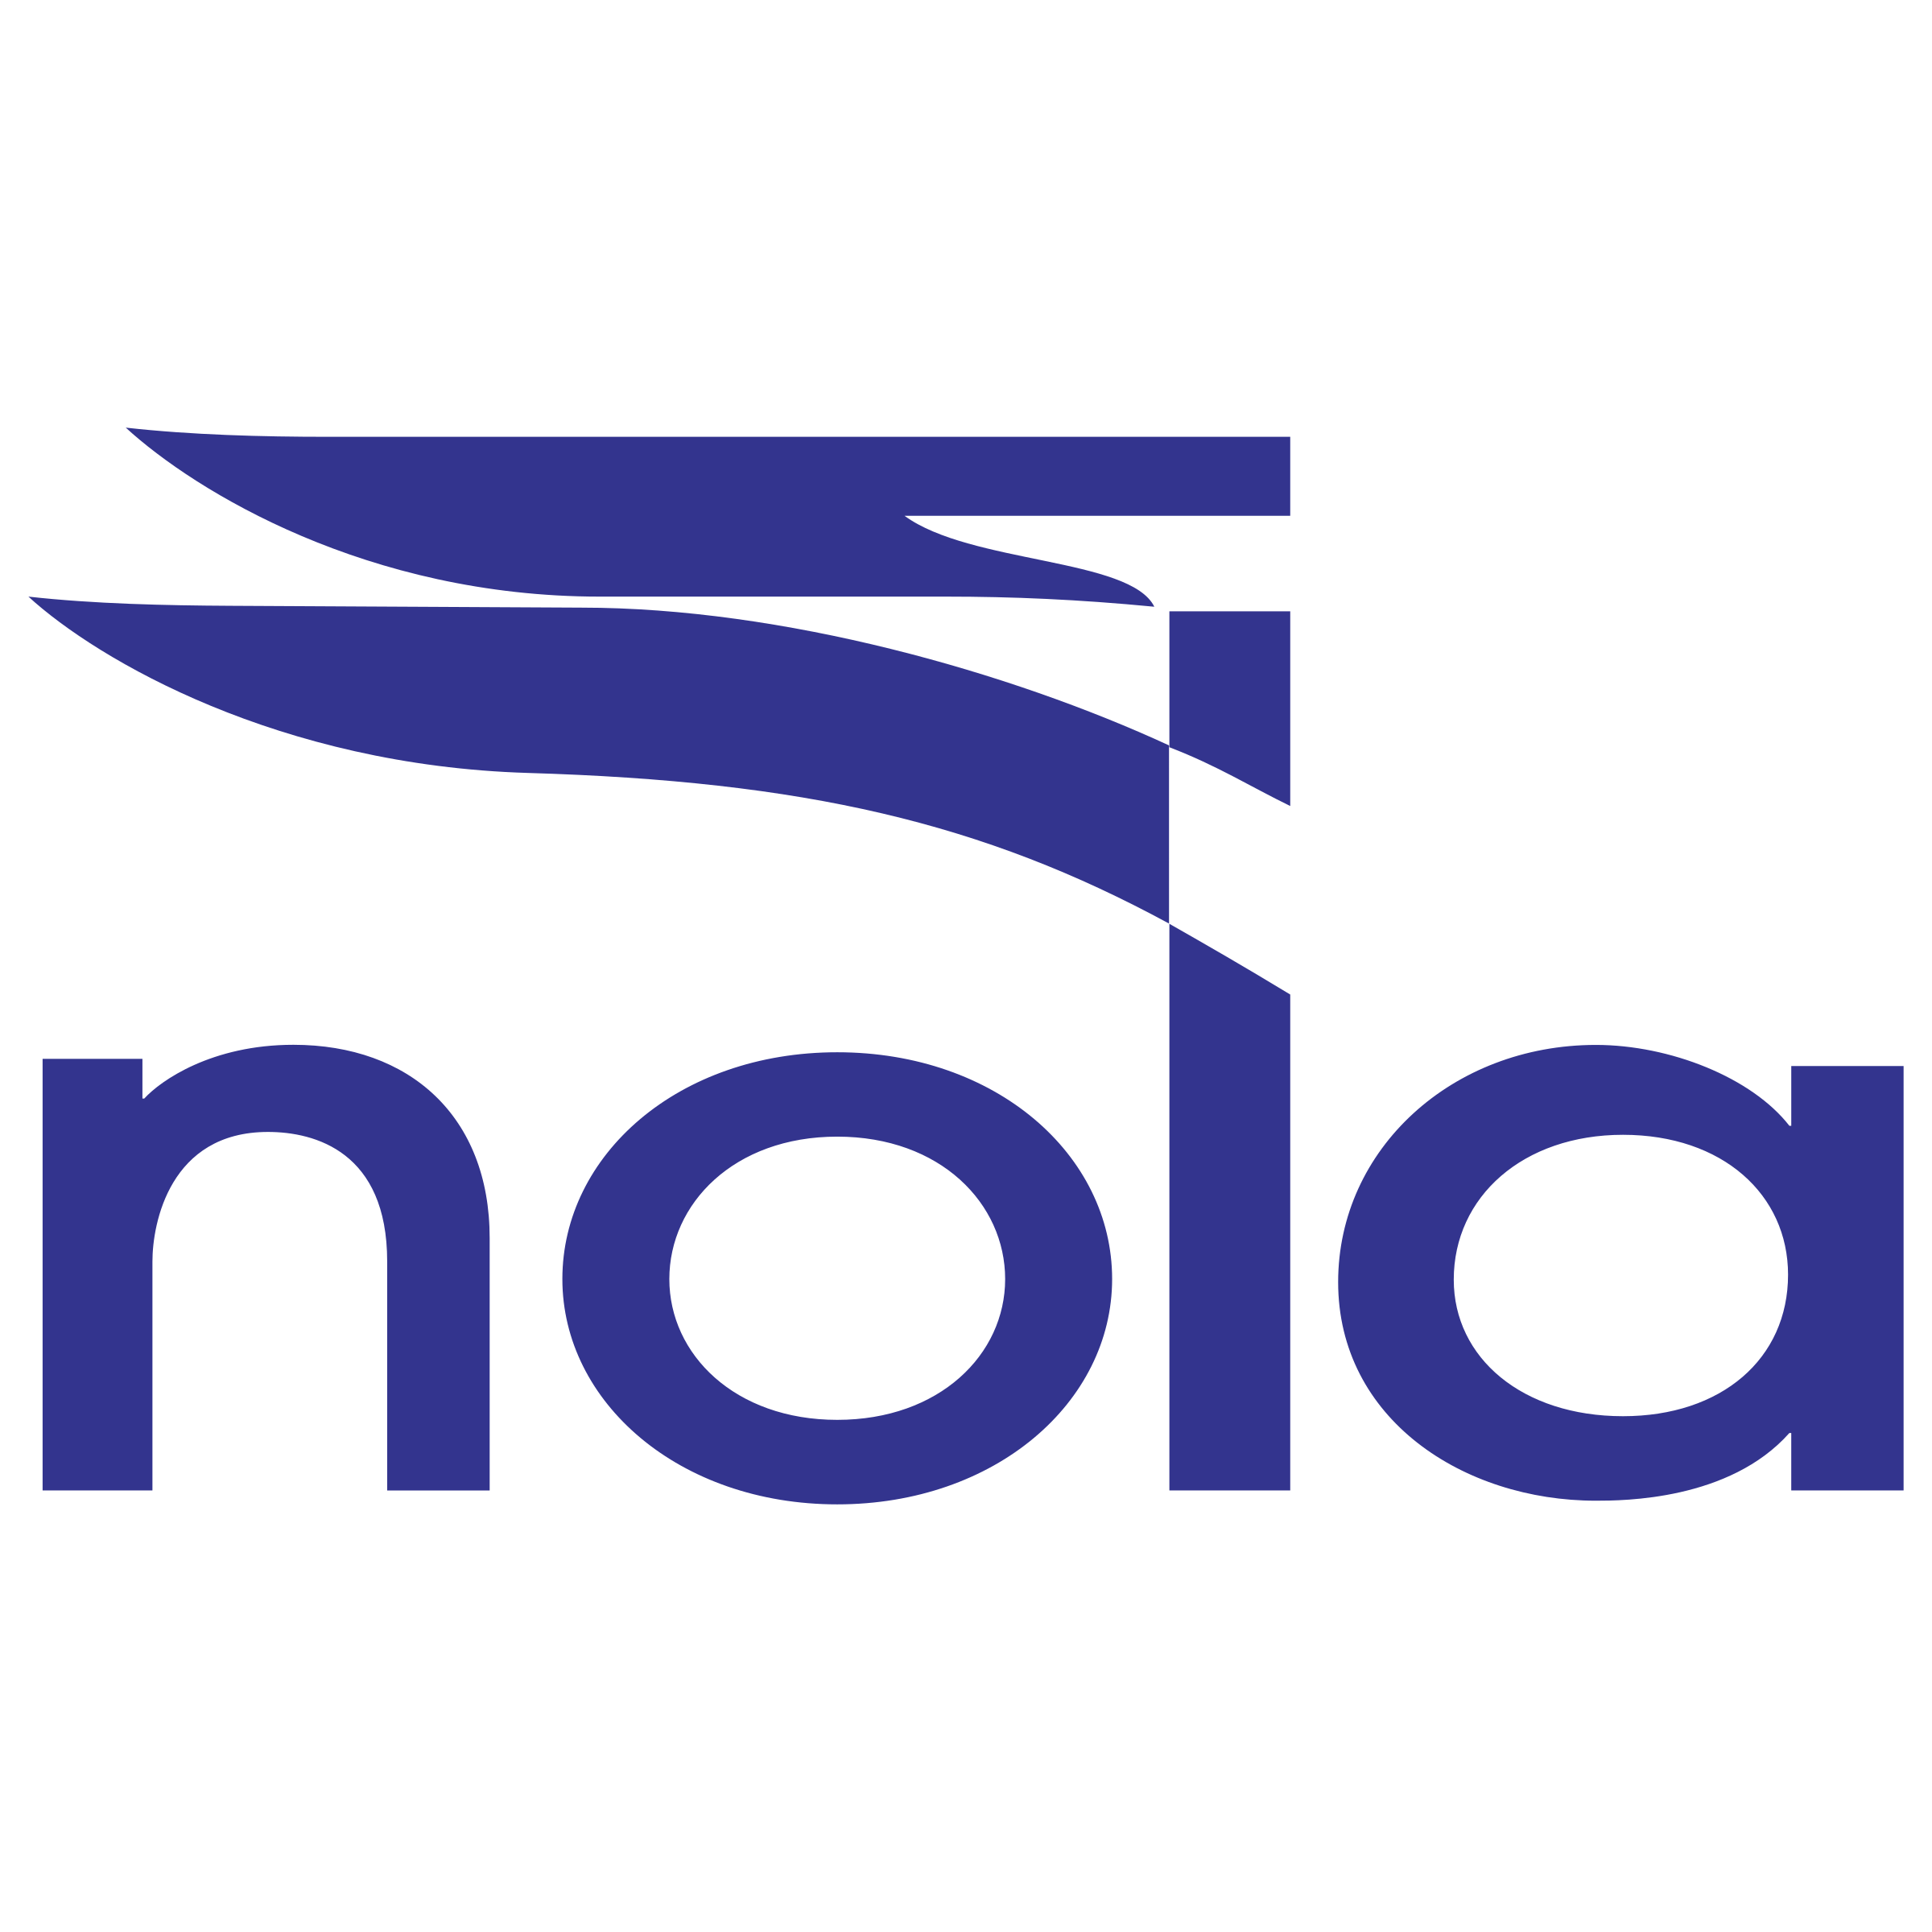 Nola Logo - Nola Logo PNG Transparent & SVG Vector - Freebie Supply